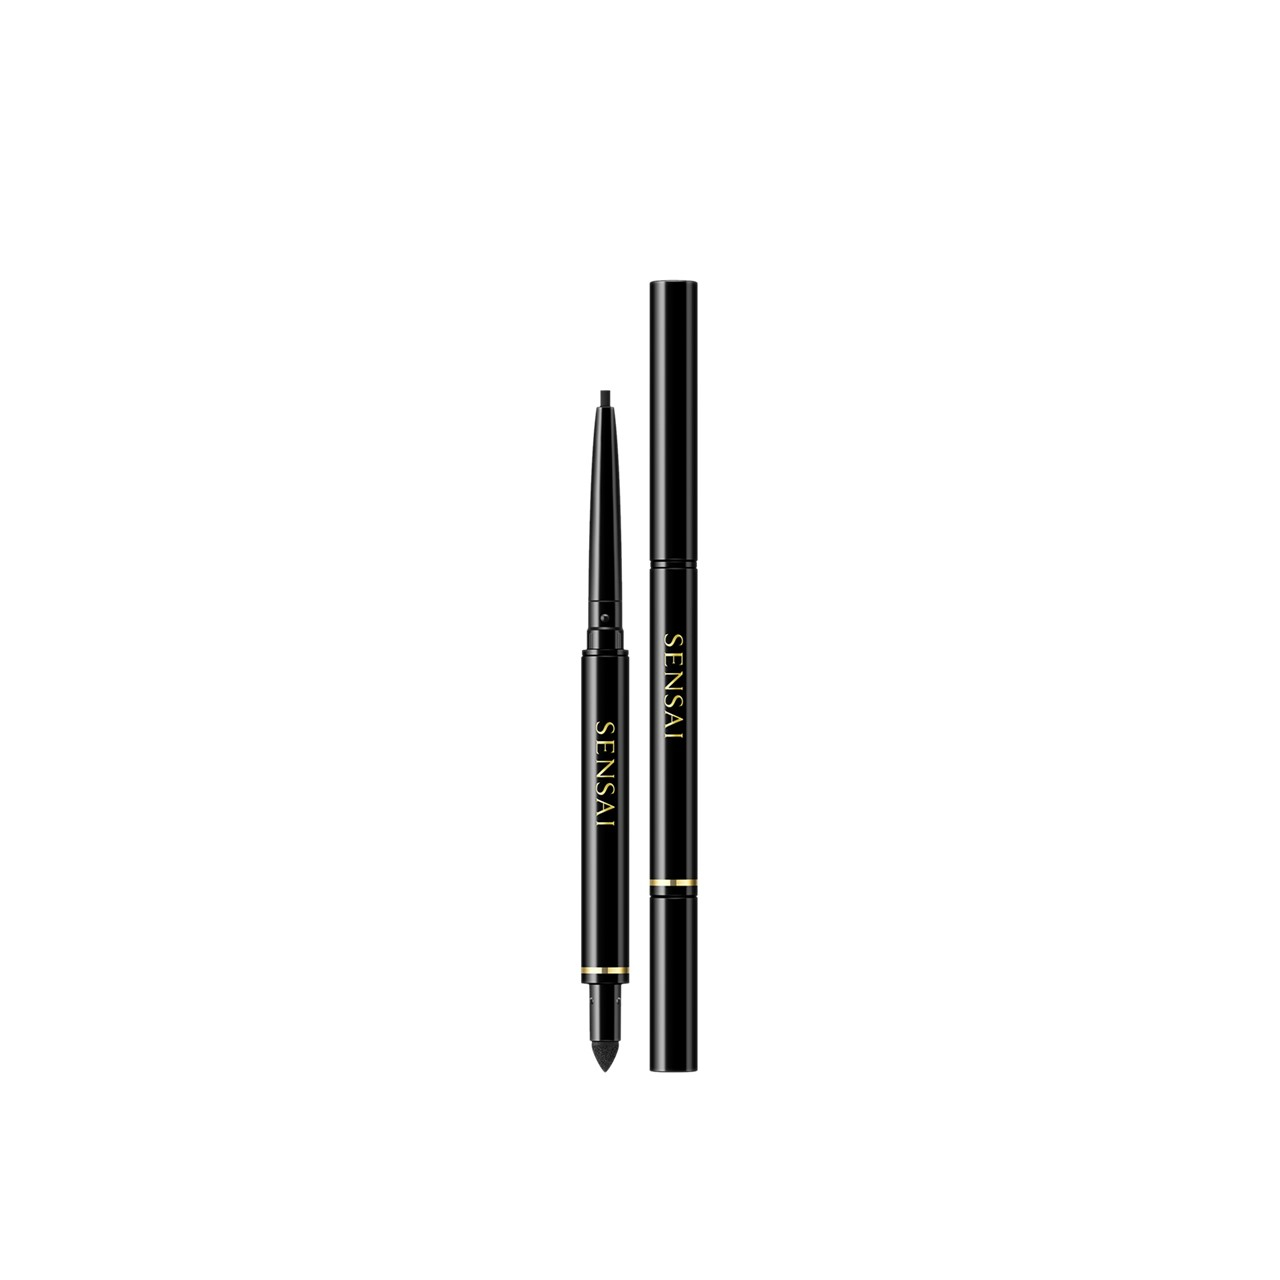 SENSAI Lasting Eyeliner Pencil 01 Black 0.1g (0.003 oz)